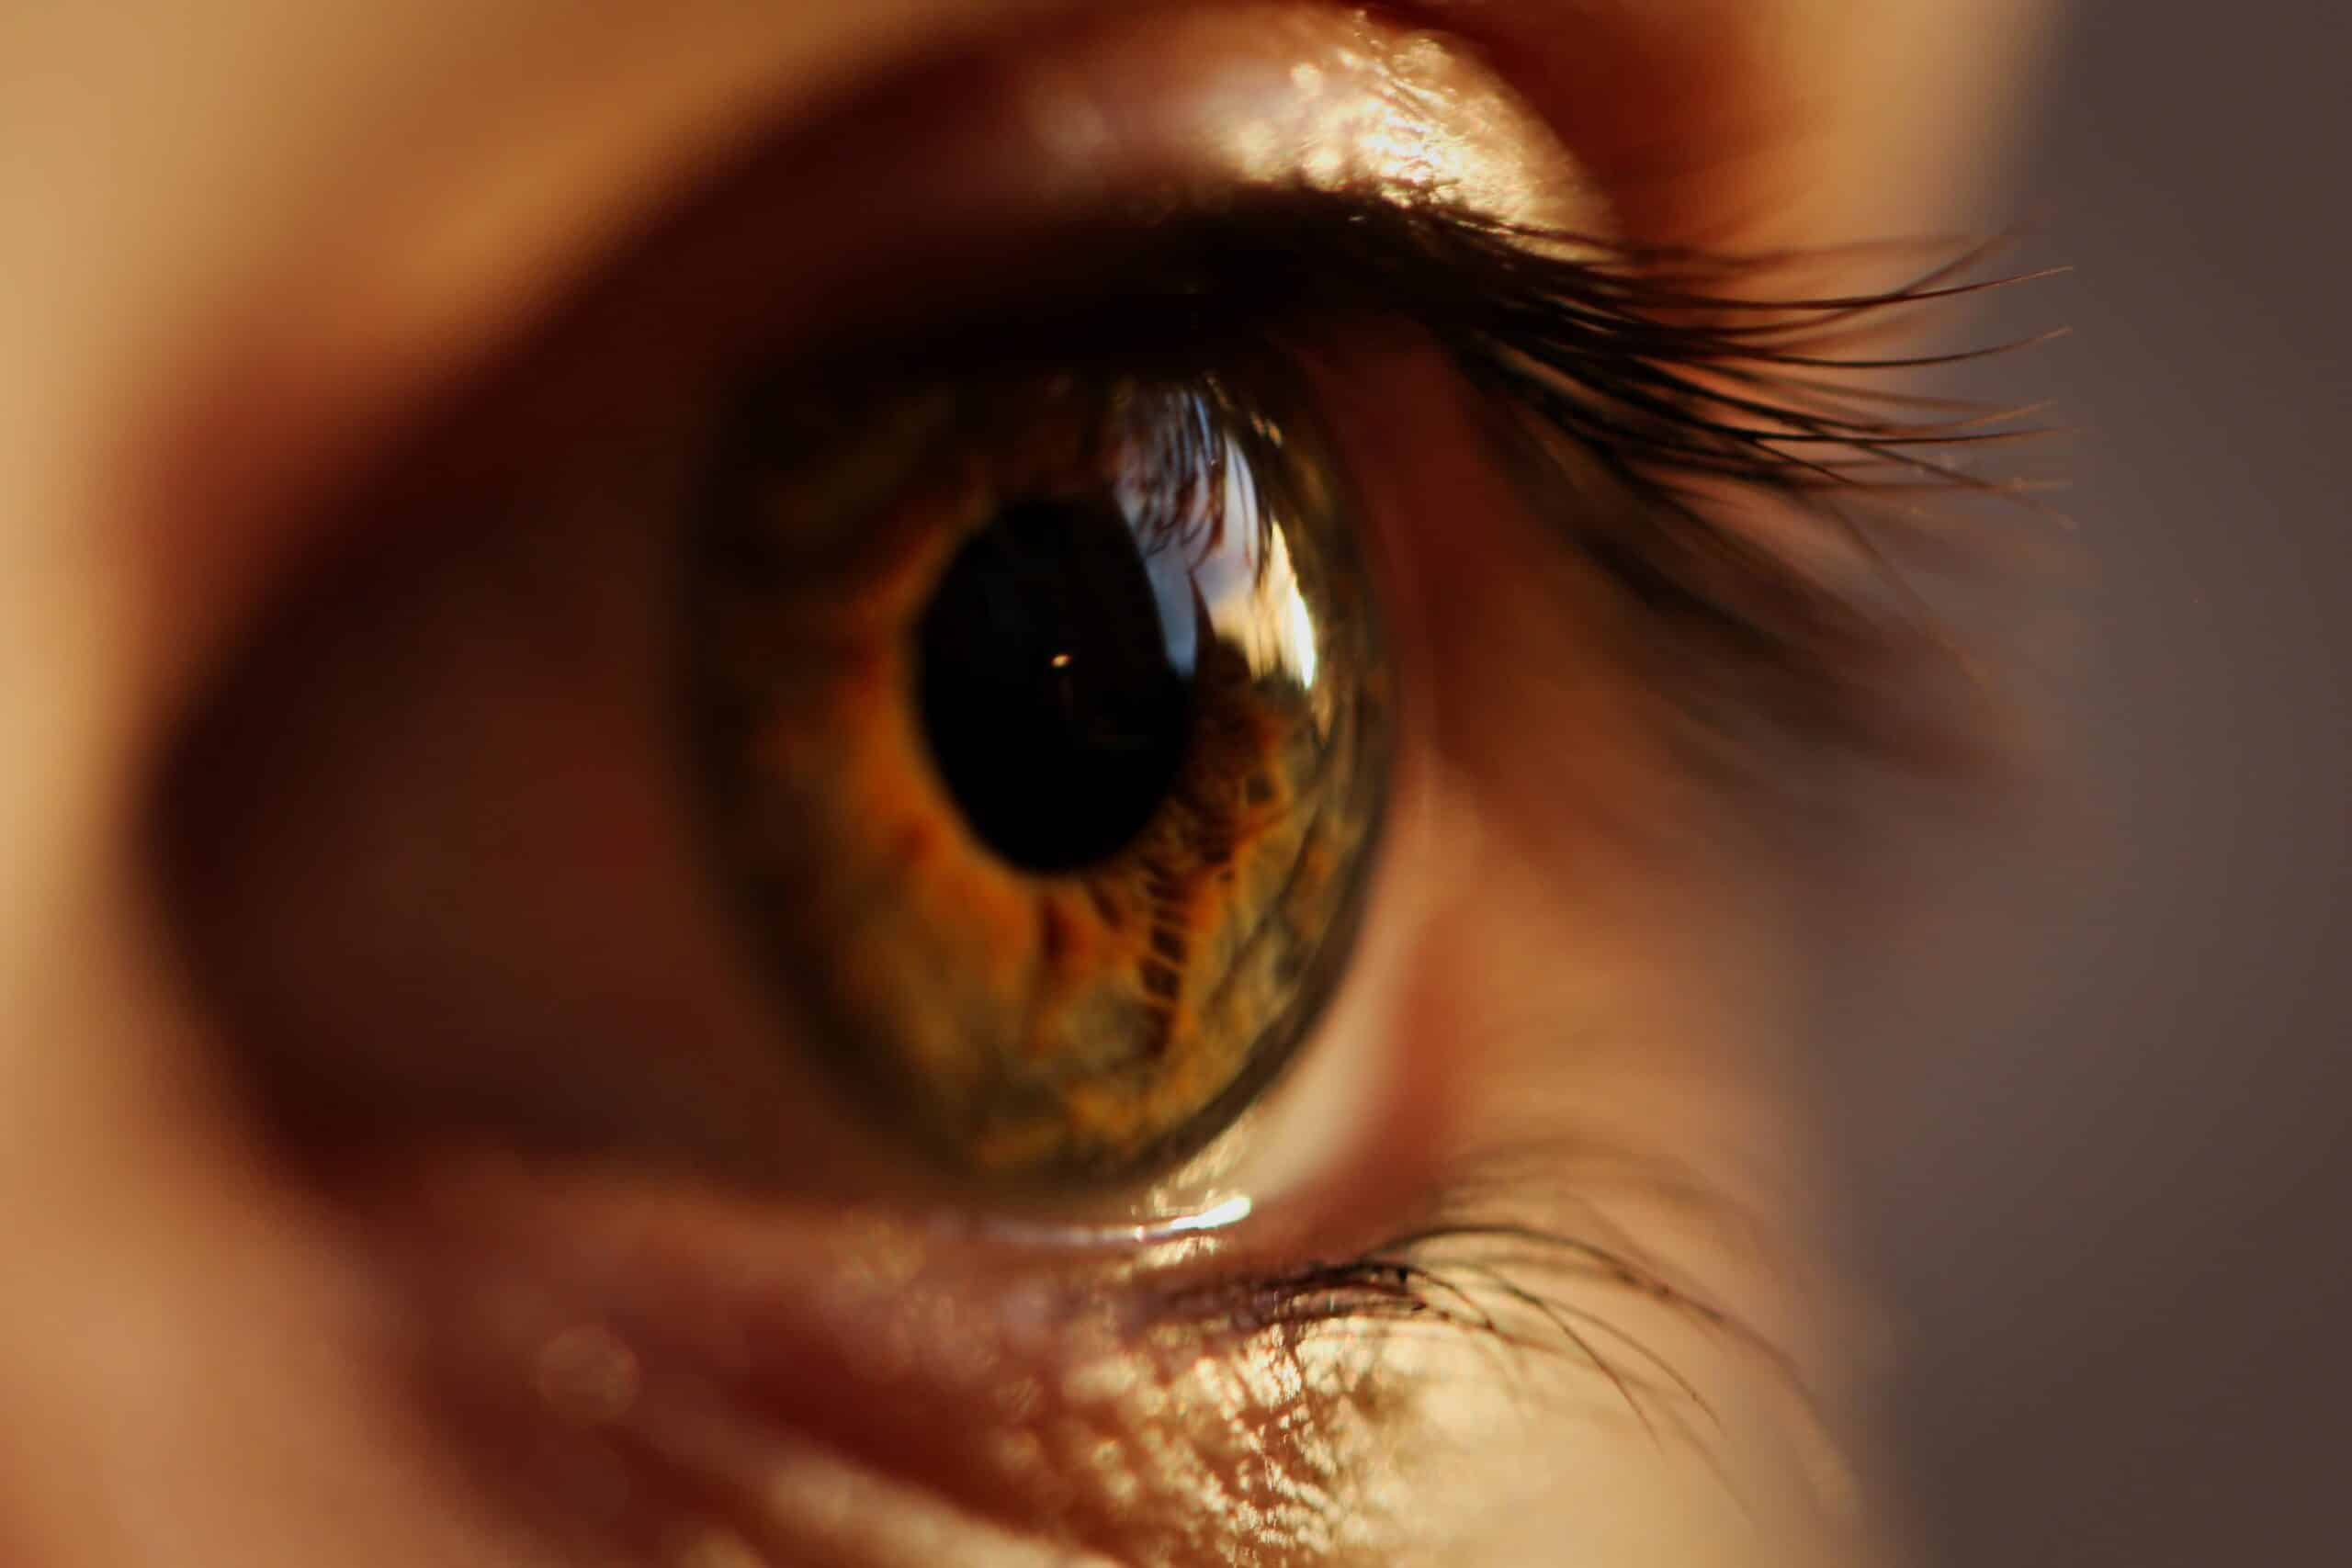 Pink-eye-symptoms-in adults